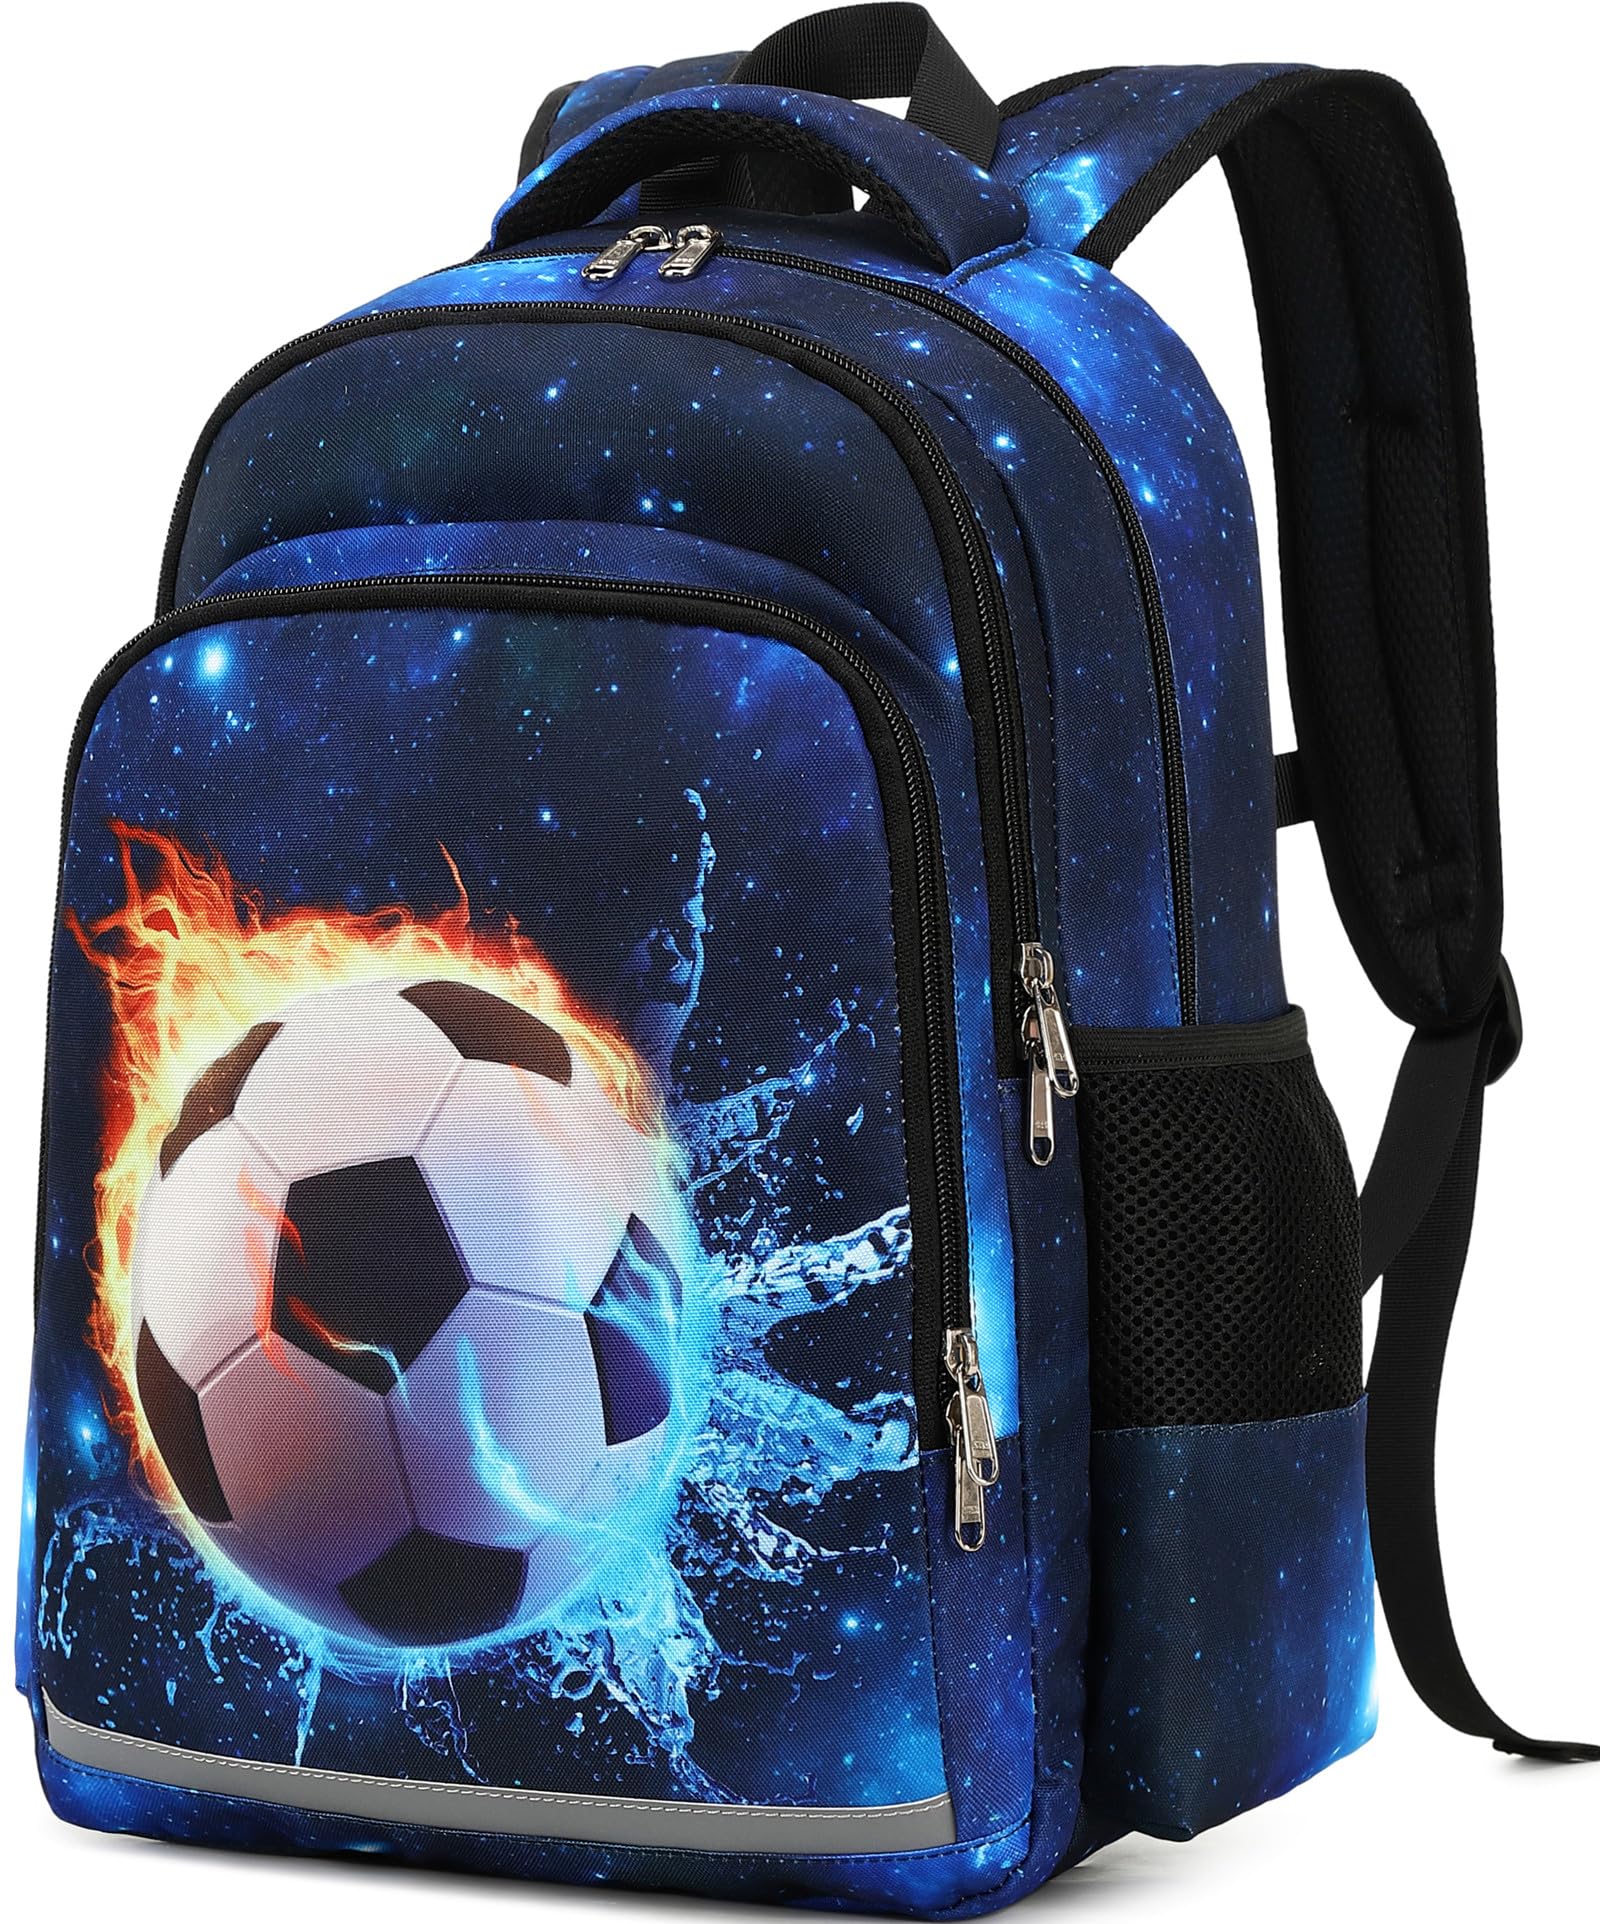 CAMTOP Soccer Backpack for School Kids Boys Backpacks Preschool Kindergarten Elementary Football Bookbag(Age 3-8 Years)